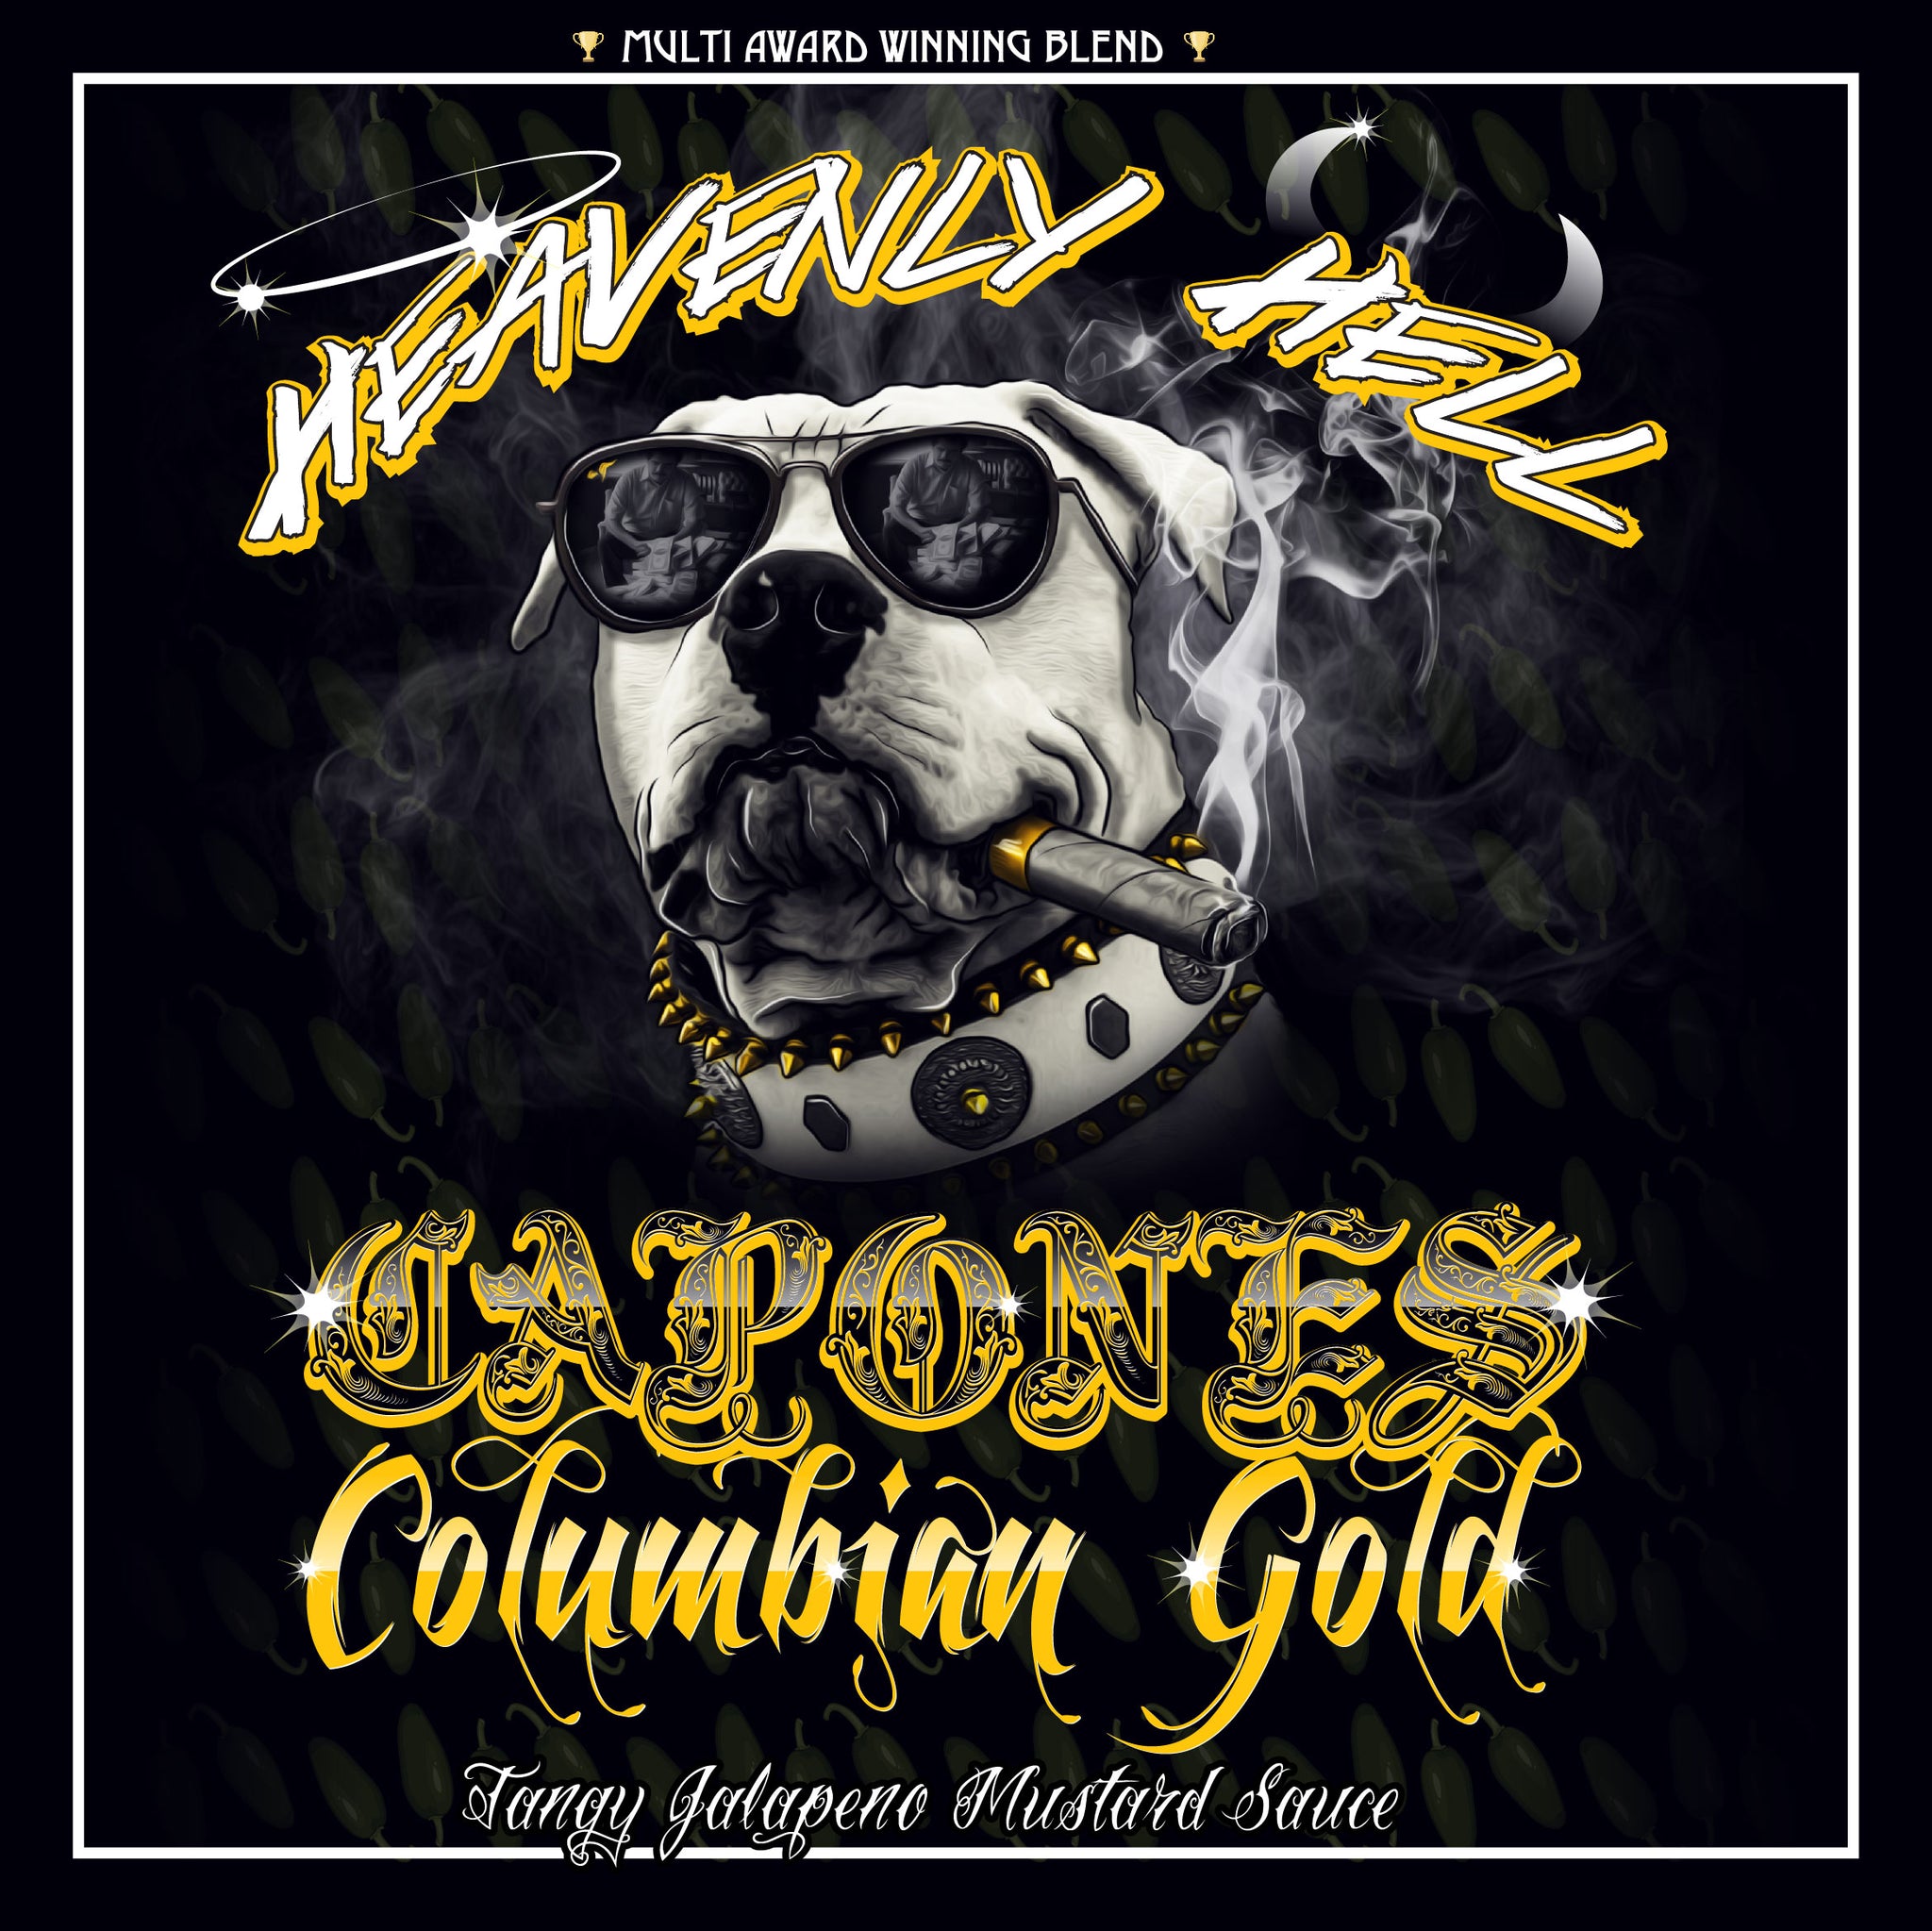 Capones Columbian Gold